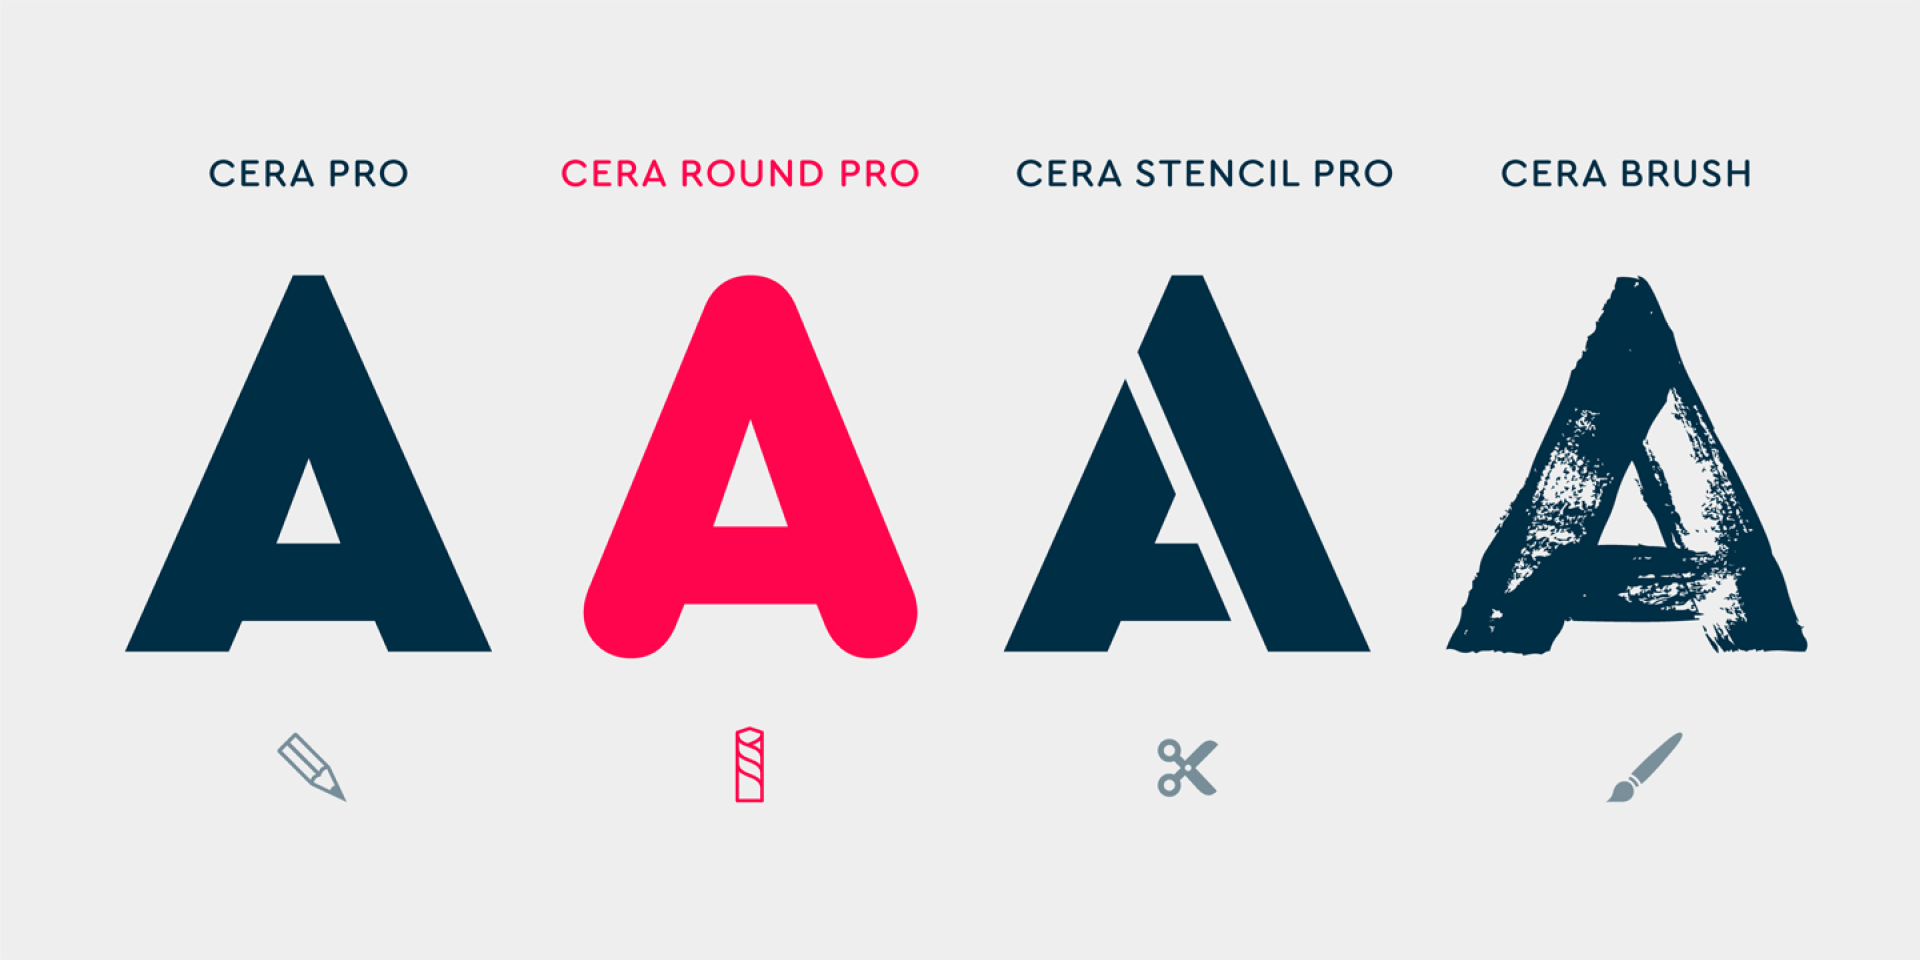 Cera Round Pro